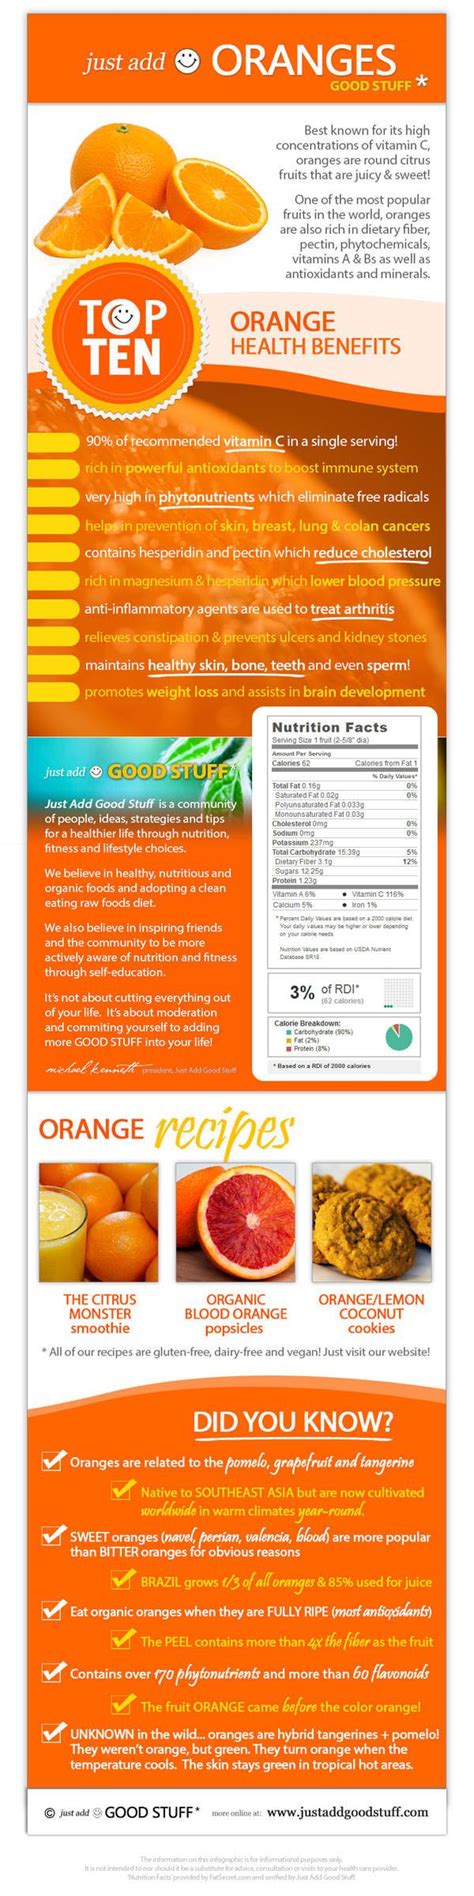 Top 10 Orange Health Benefits 22 Useful Infographics